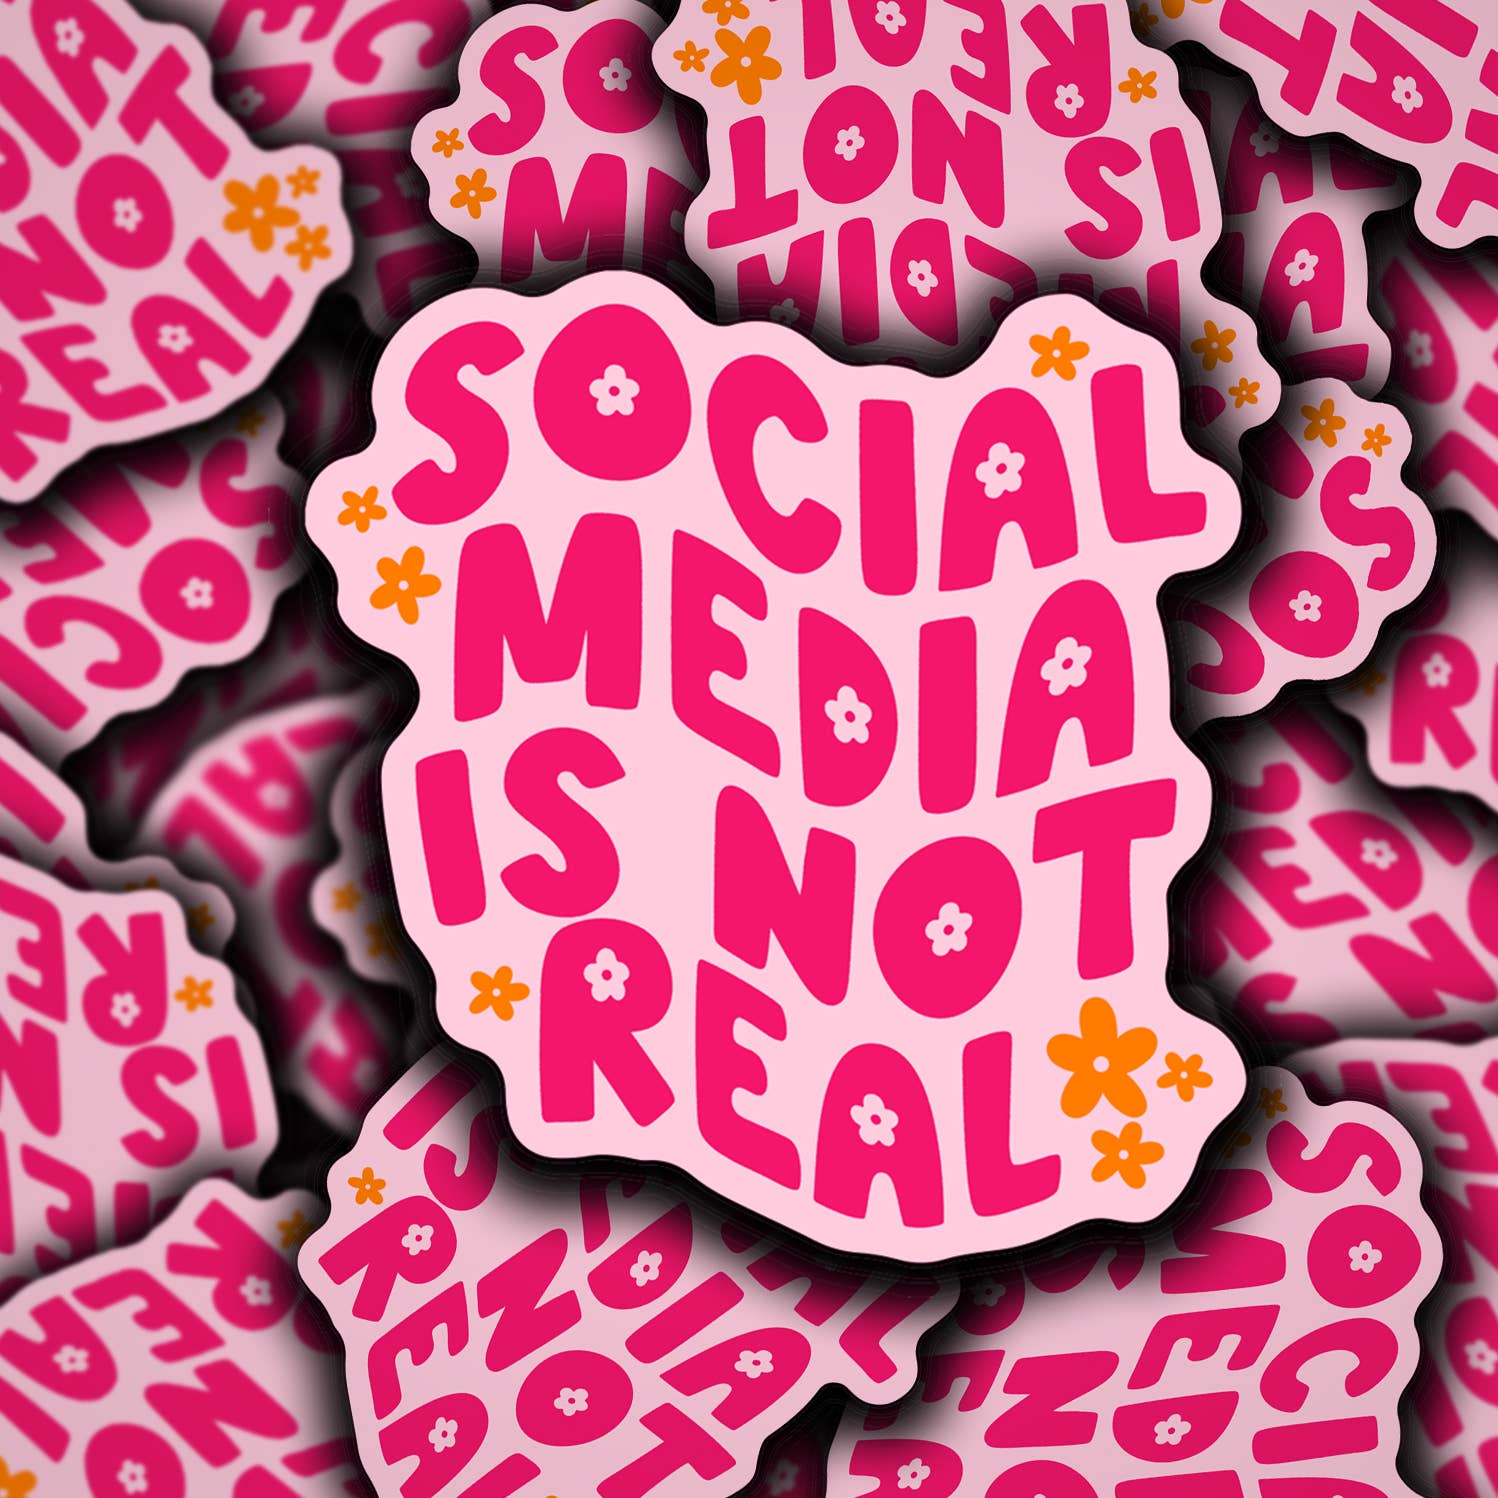 Vinyl Decal Social Media Is Not Real